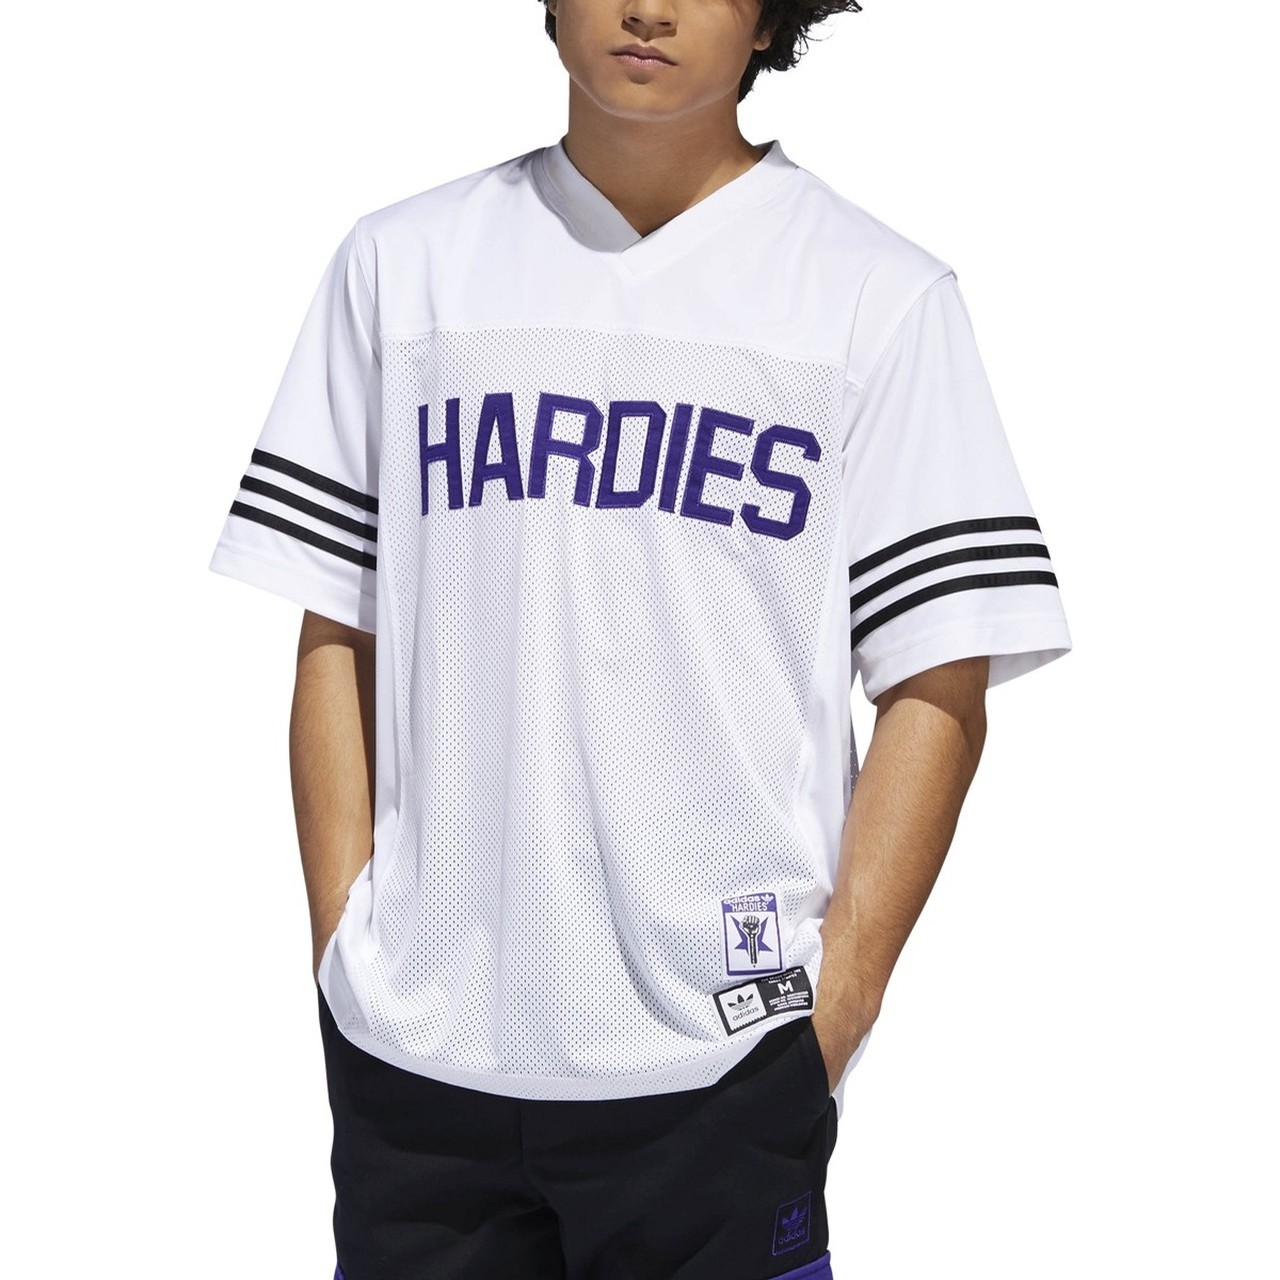 Adidas Hardies Jersey (White/Collegiate 